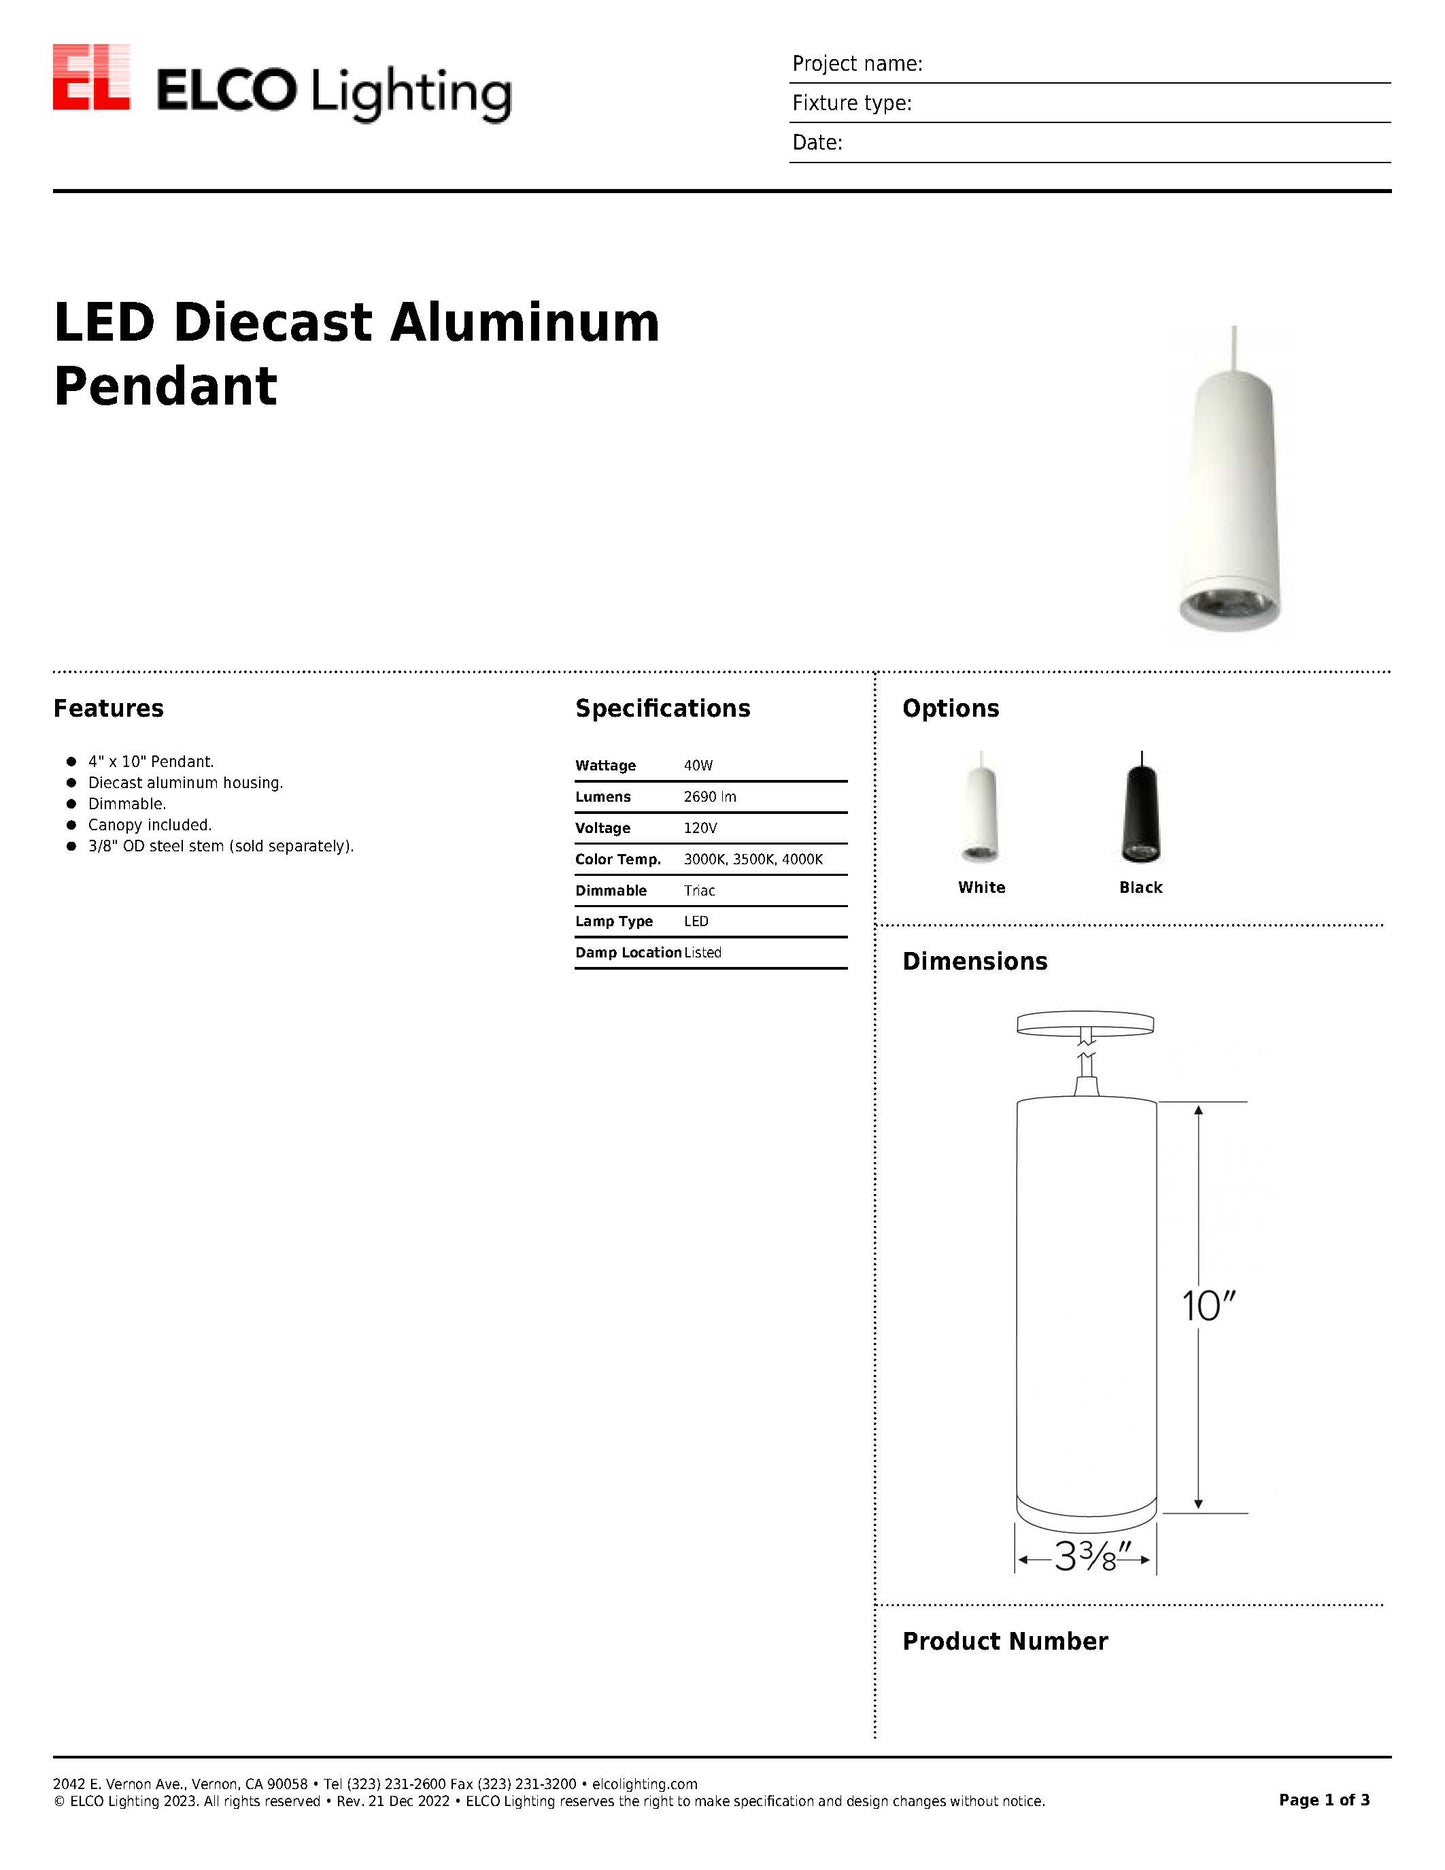 LED Diecast Aluminum Pendants EDL83